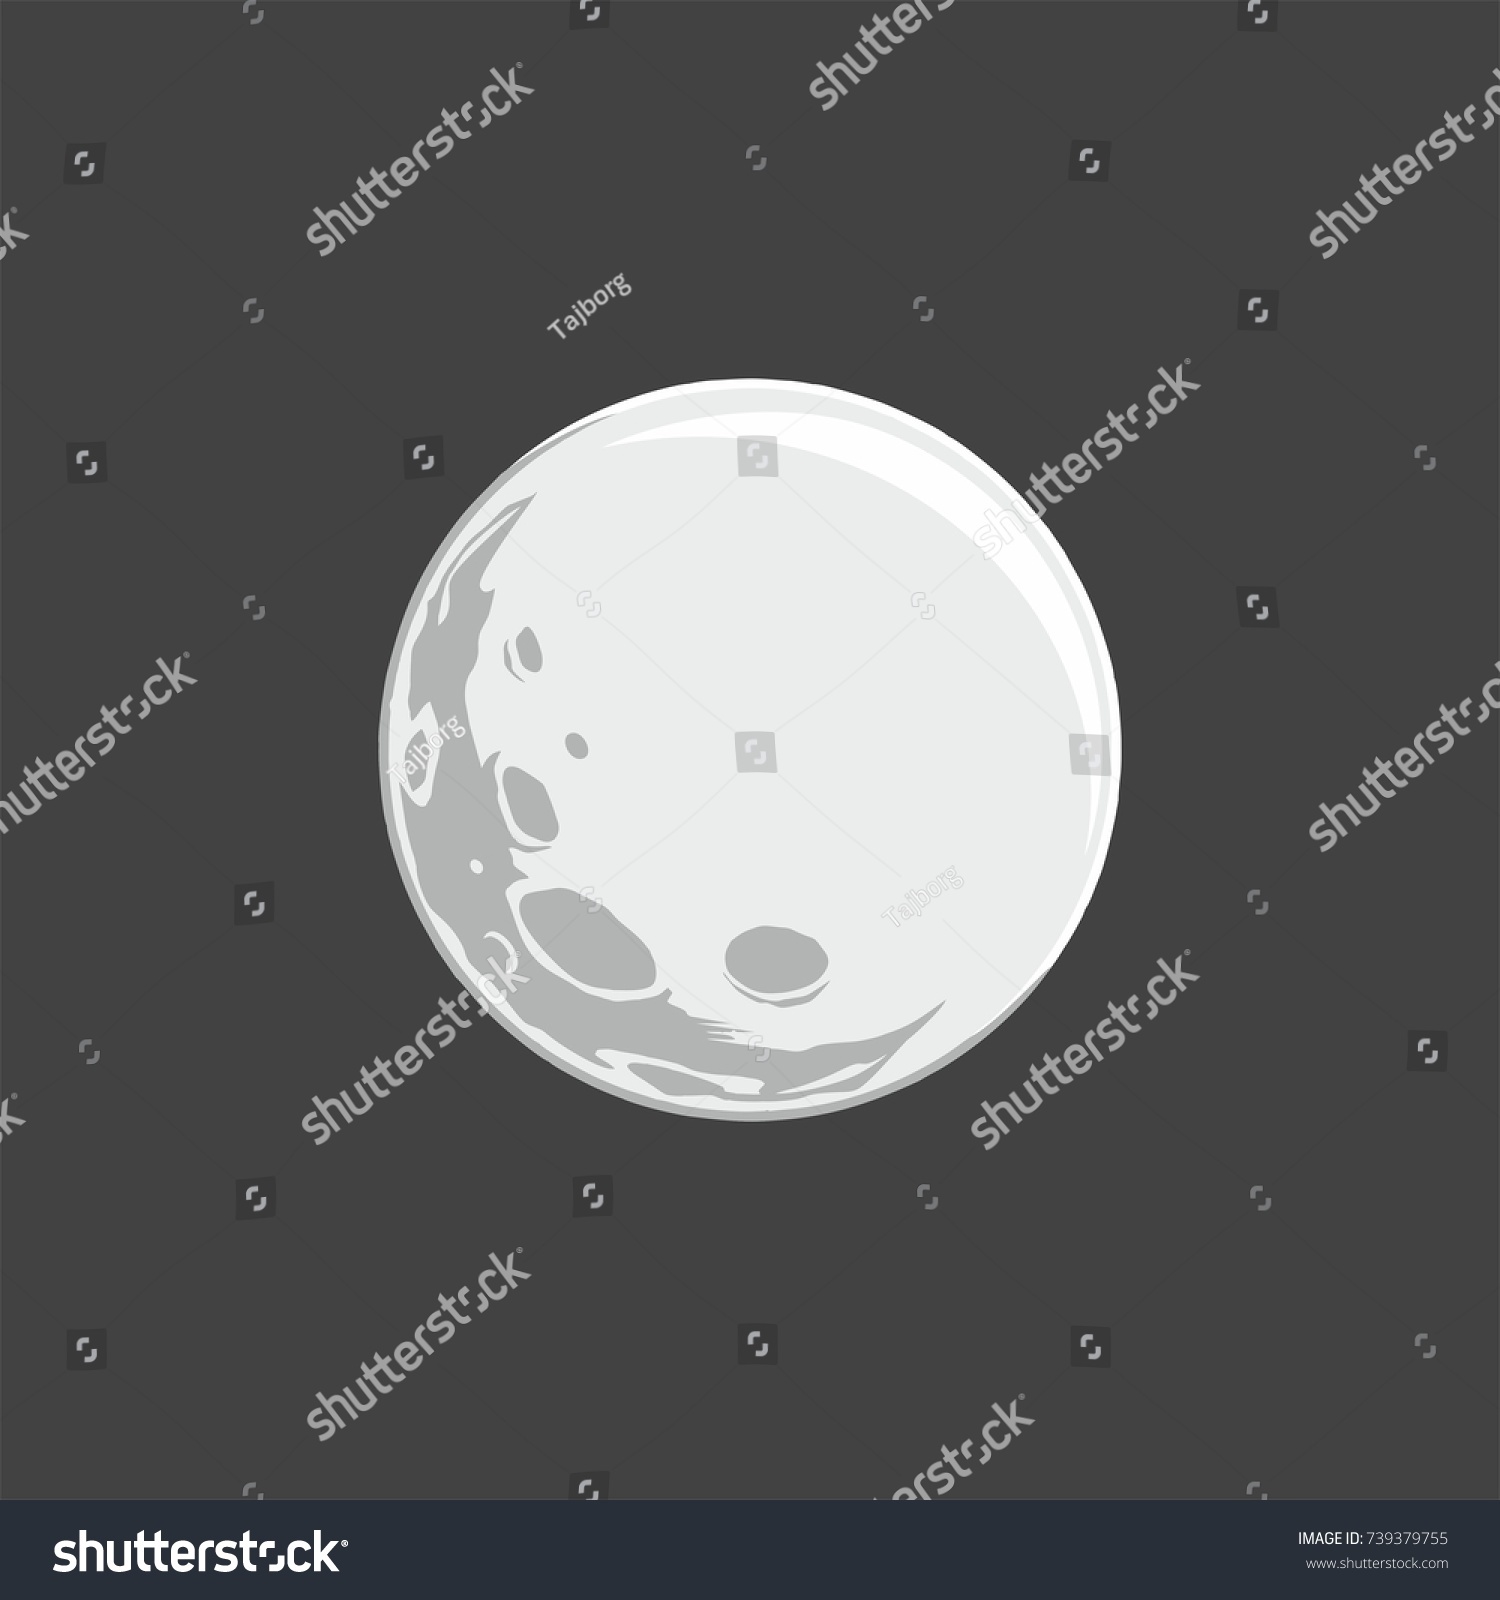 Vector Illustration Moon Shades Gray On Stock Vector 739379755 ...